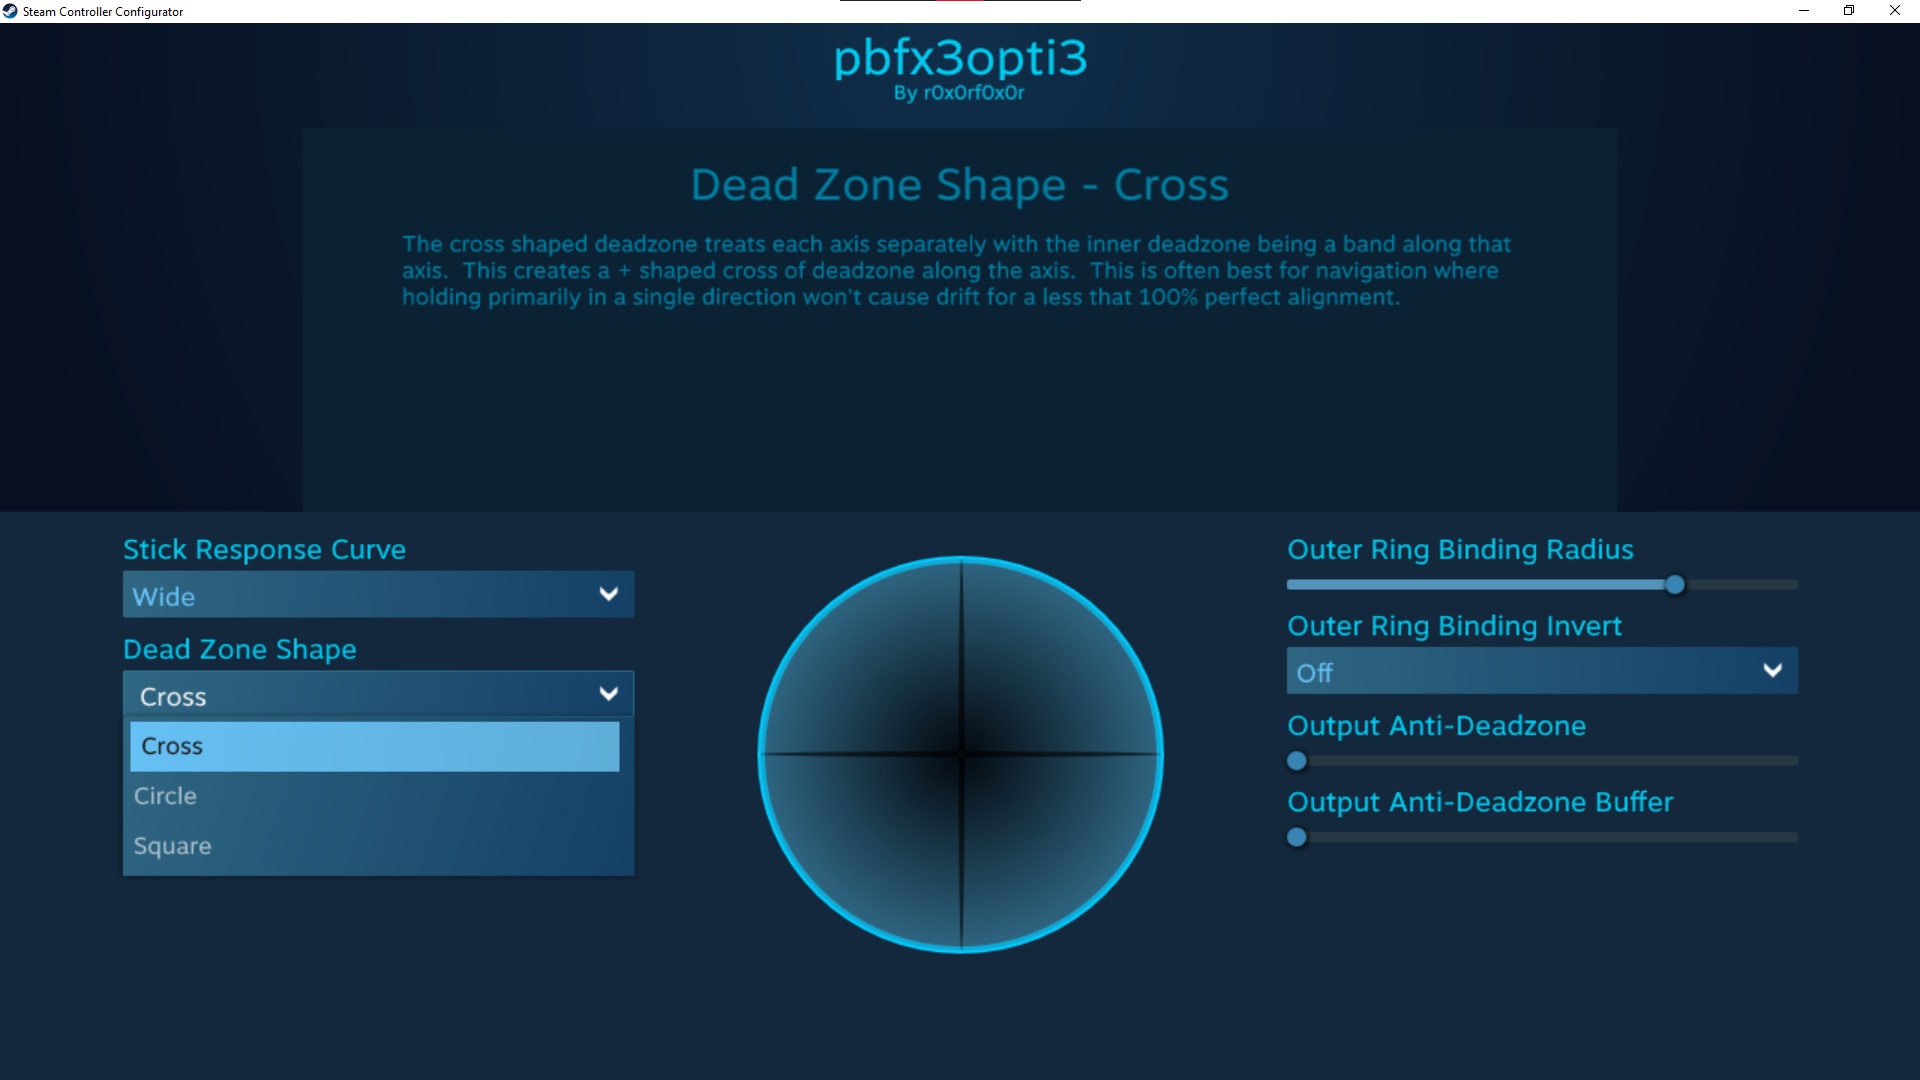 Pinball FX3 - Custom Controller Settings for Steam Games